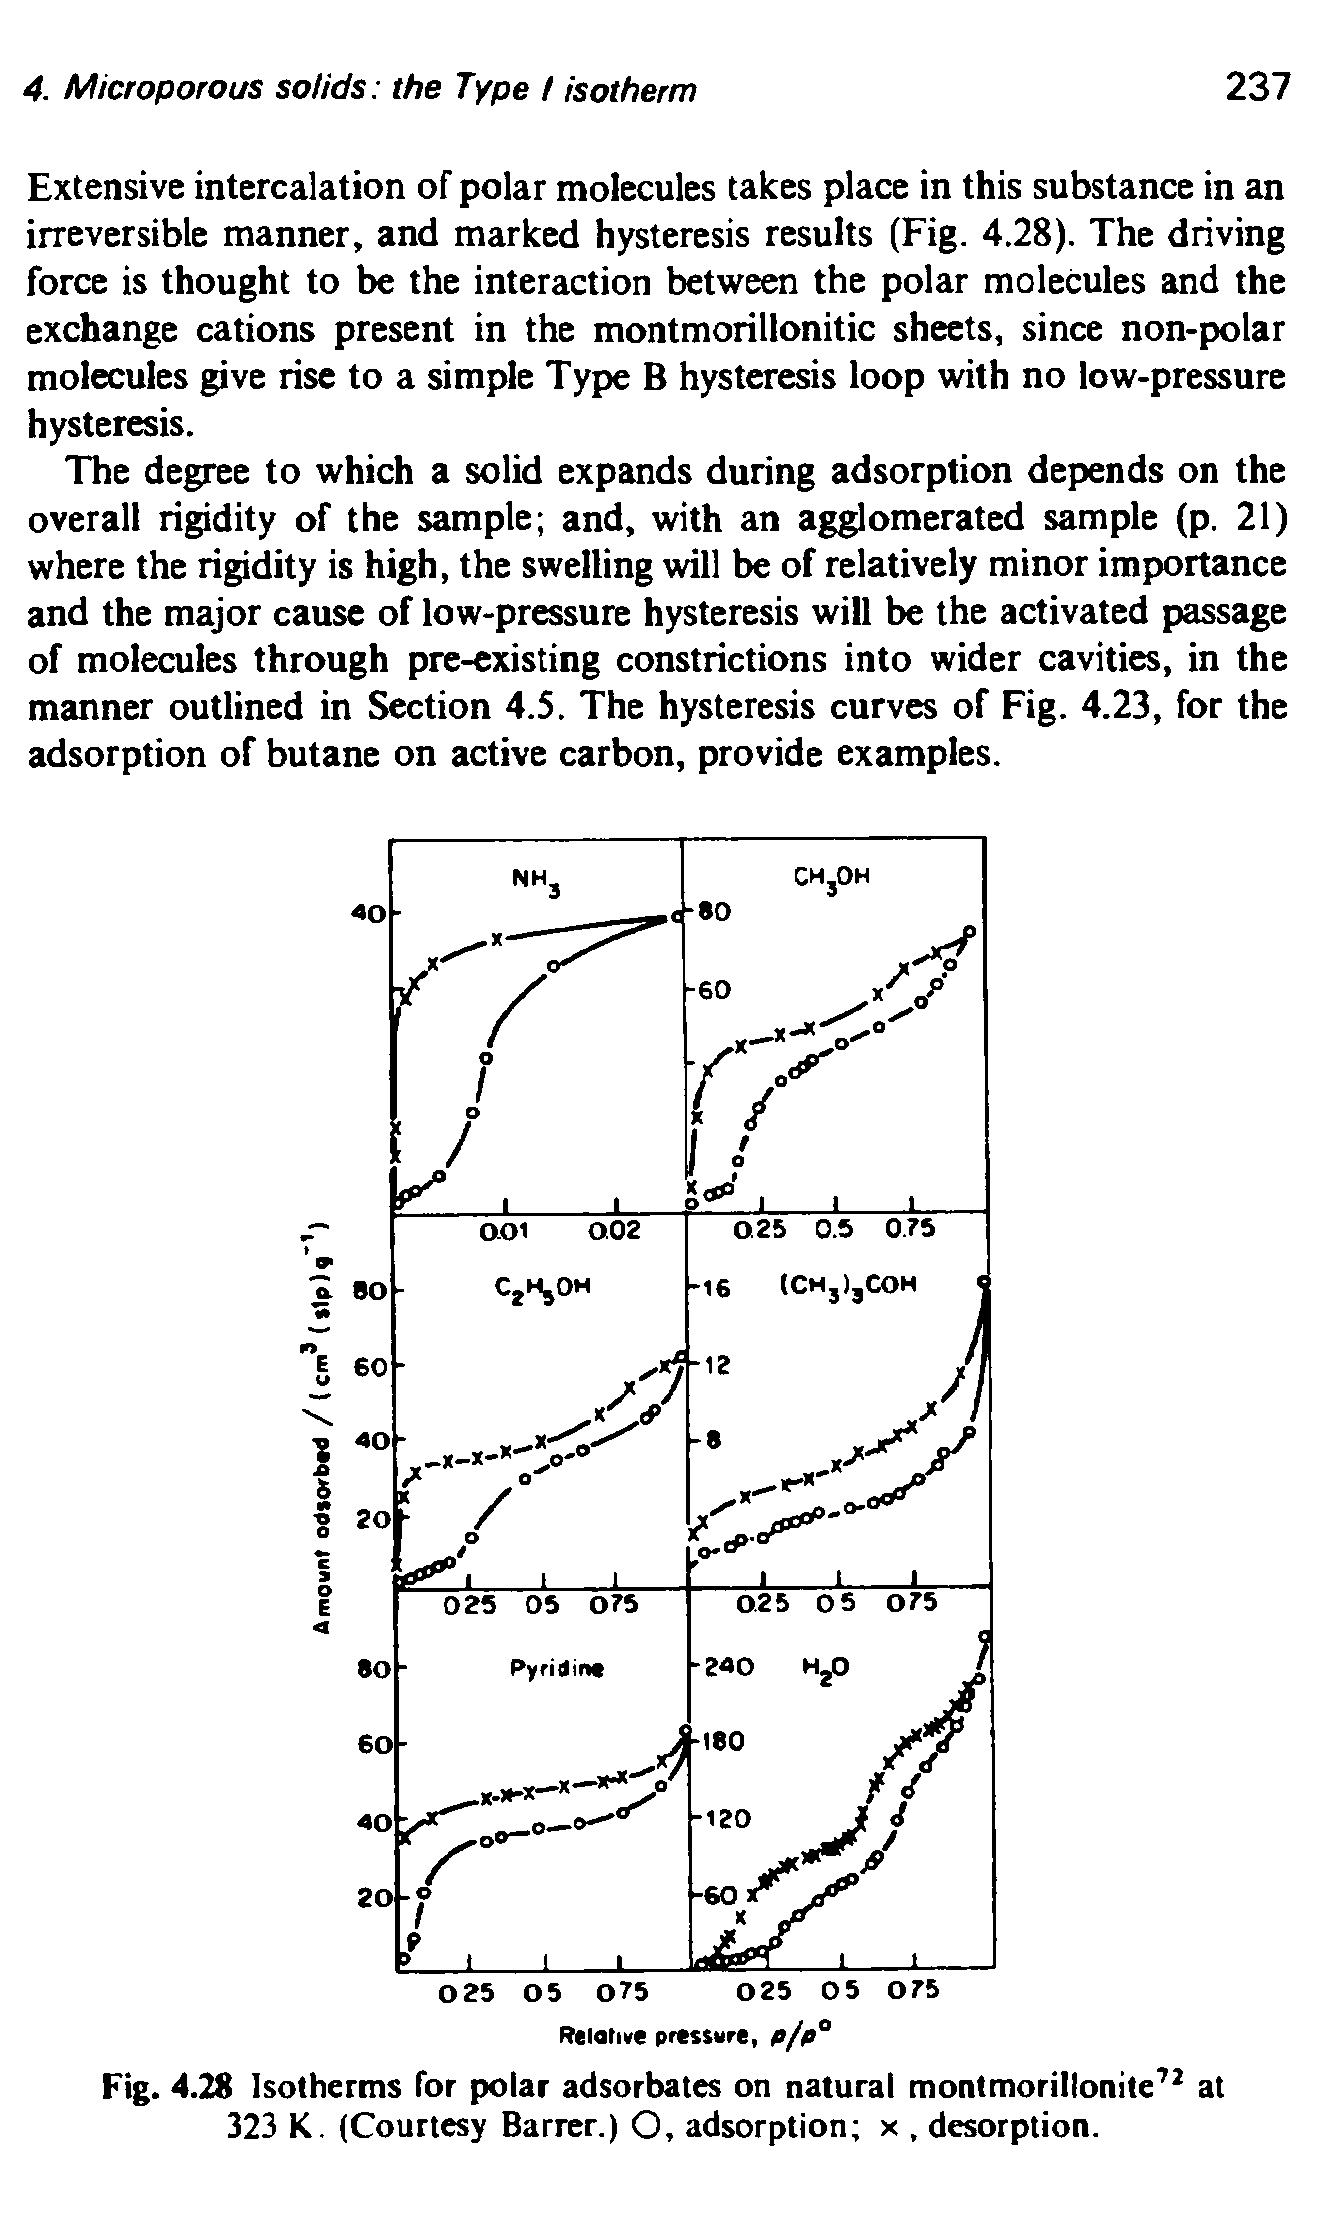 Fig. 4.28 Isotherms for polar adsorbates on natural montmorillonite at 323 K. (Courtesy Barrer.) O, adsorption x, desorption.